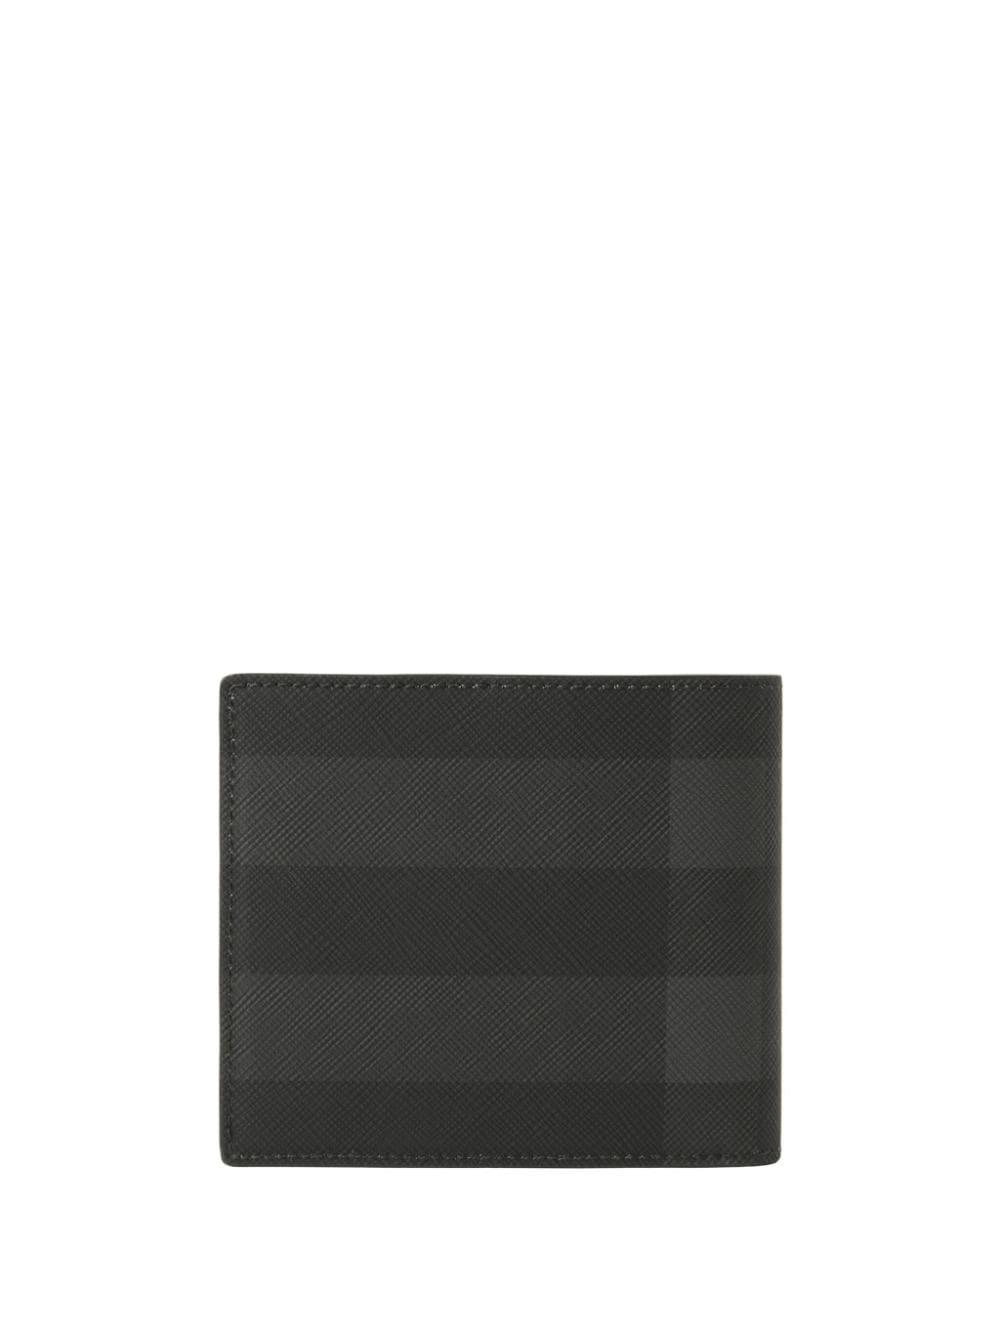 Burberry checked bi-fold wallet - Black